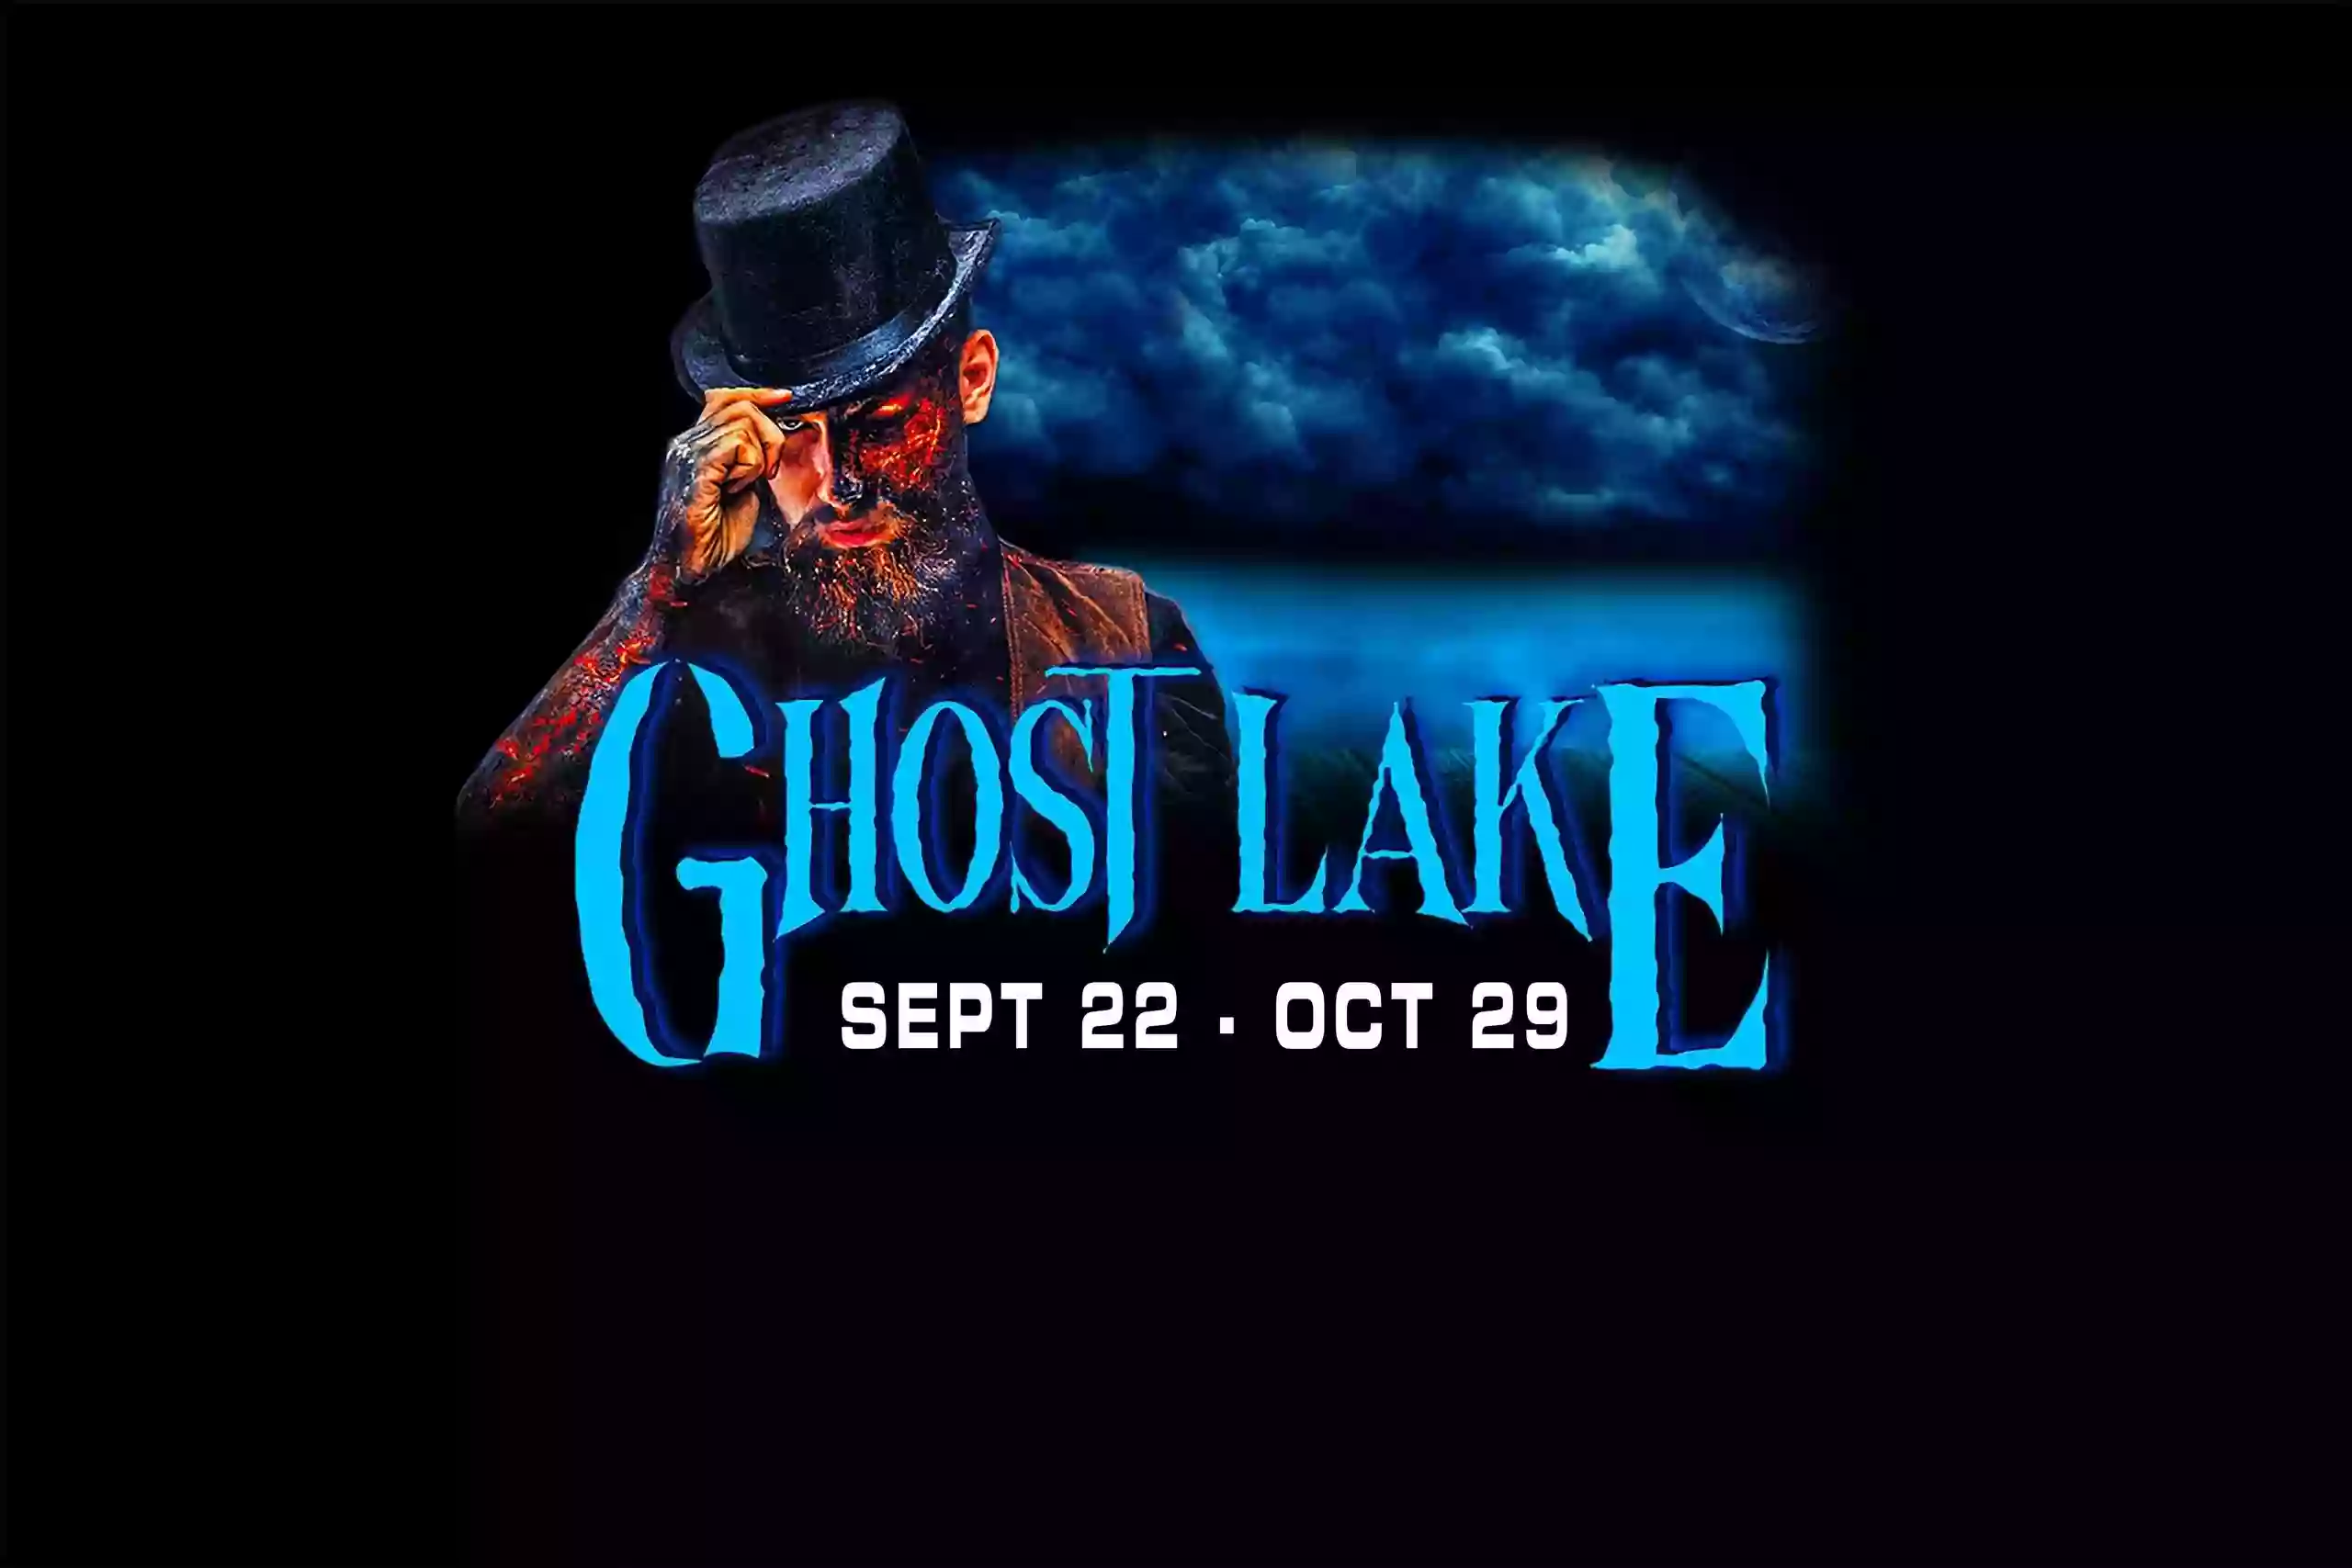 Ghost Lake Screampark